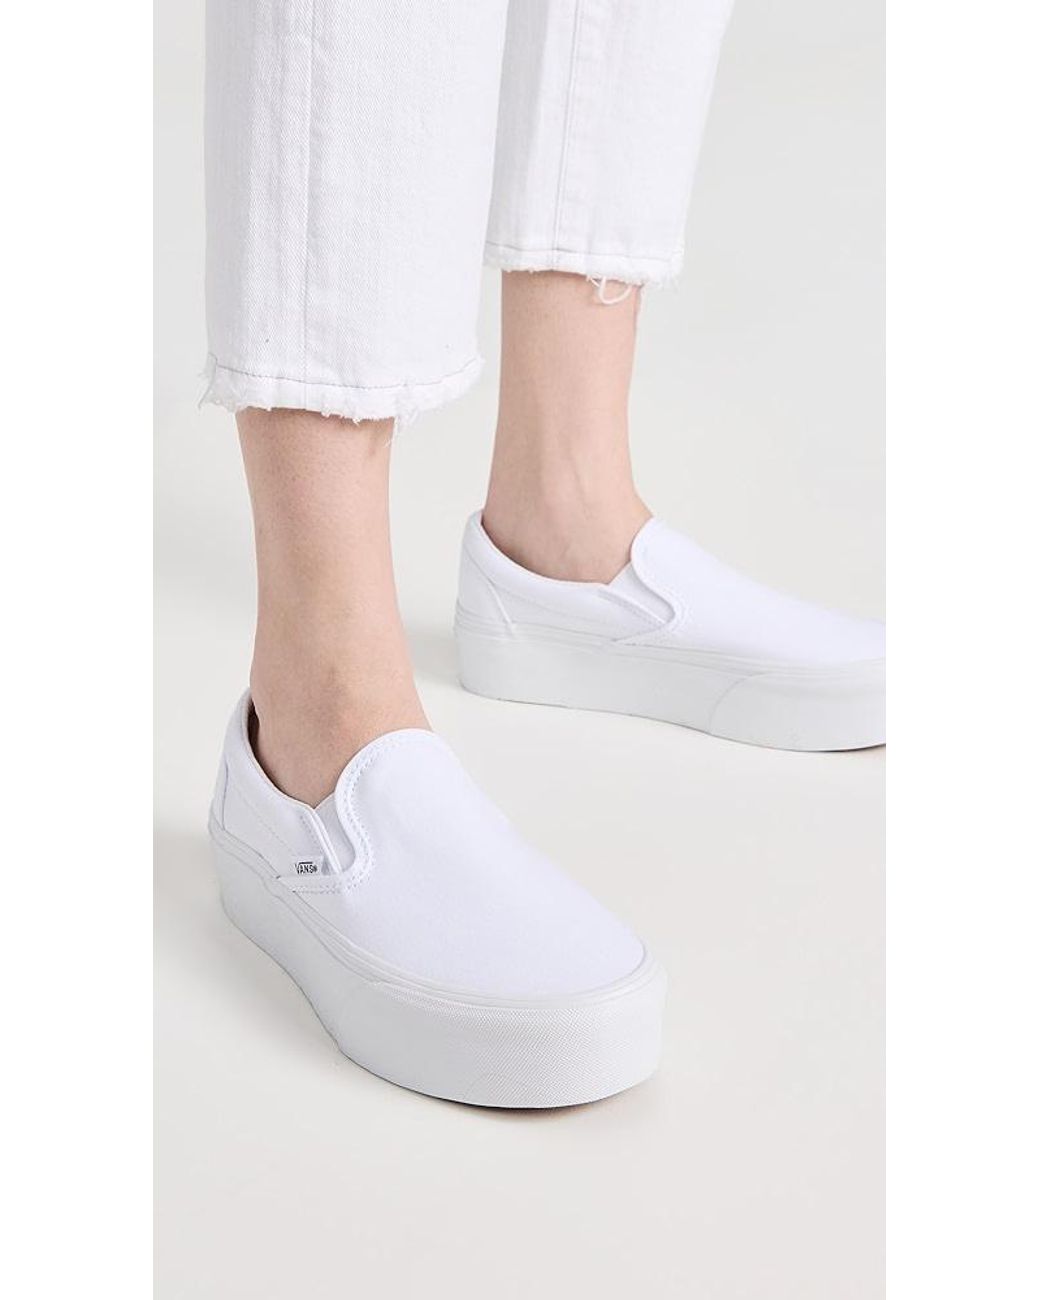 Vans Ua Classic Slip-on Stackform Sneakers in White | Lyst